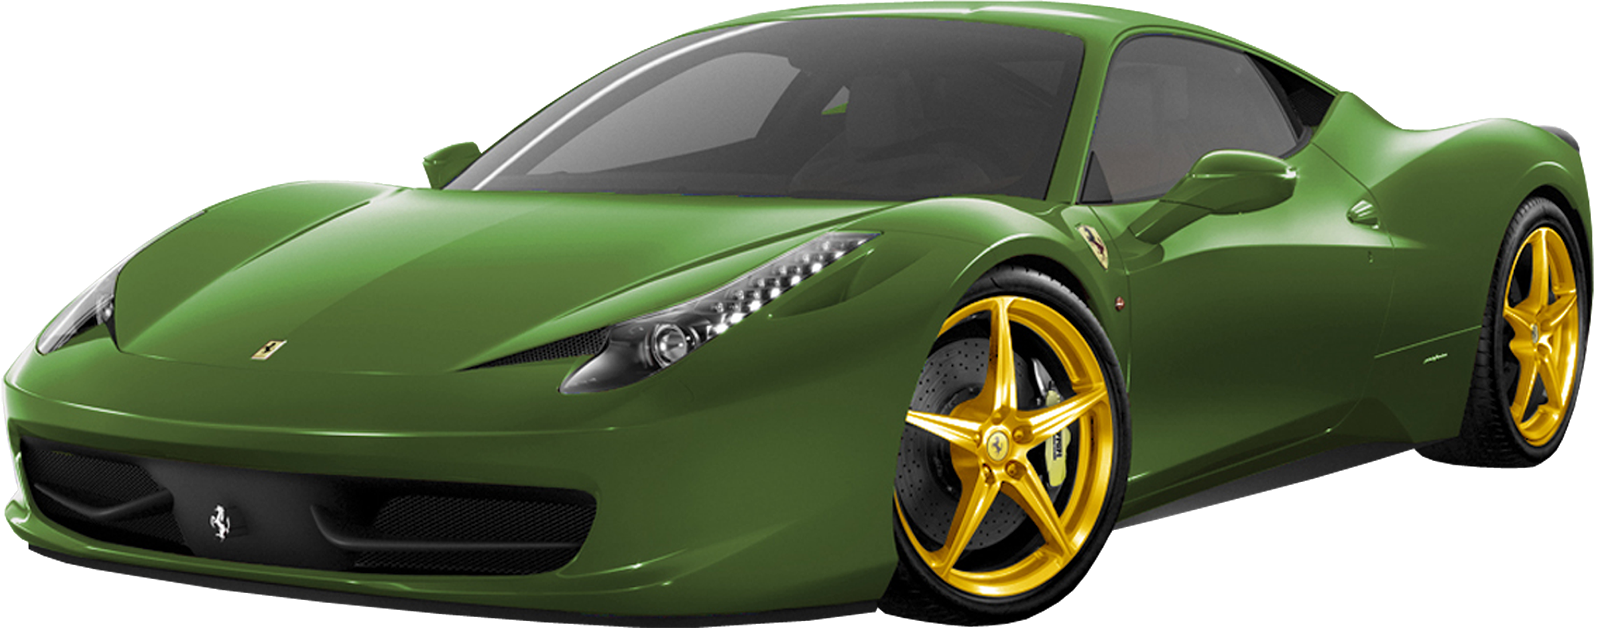 Ferrari xanh